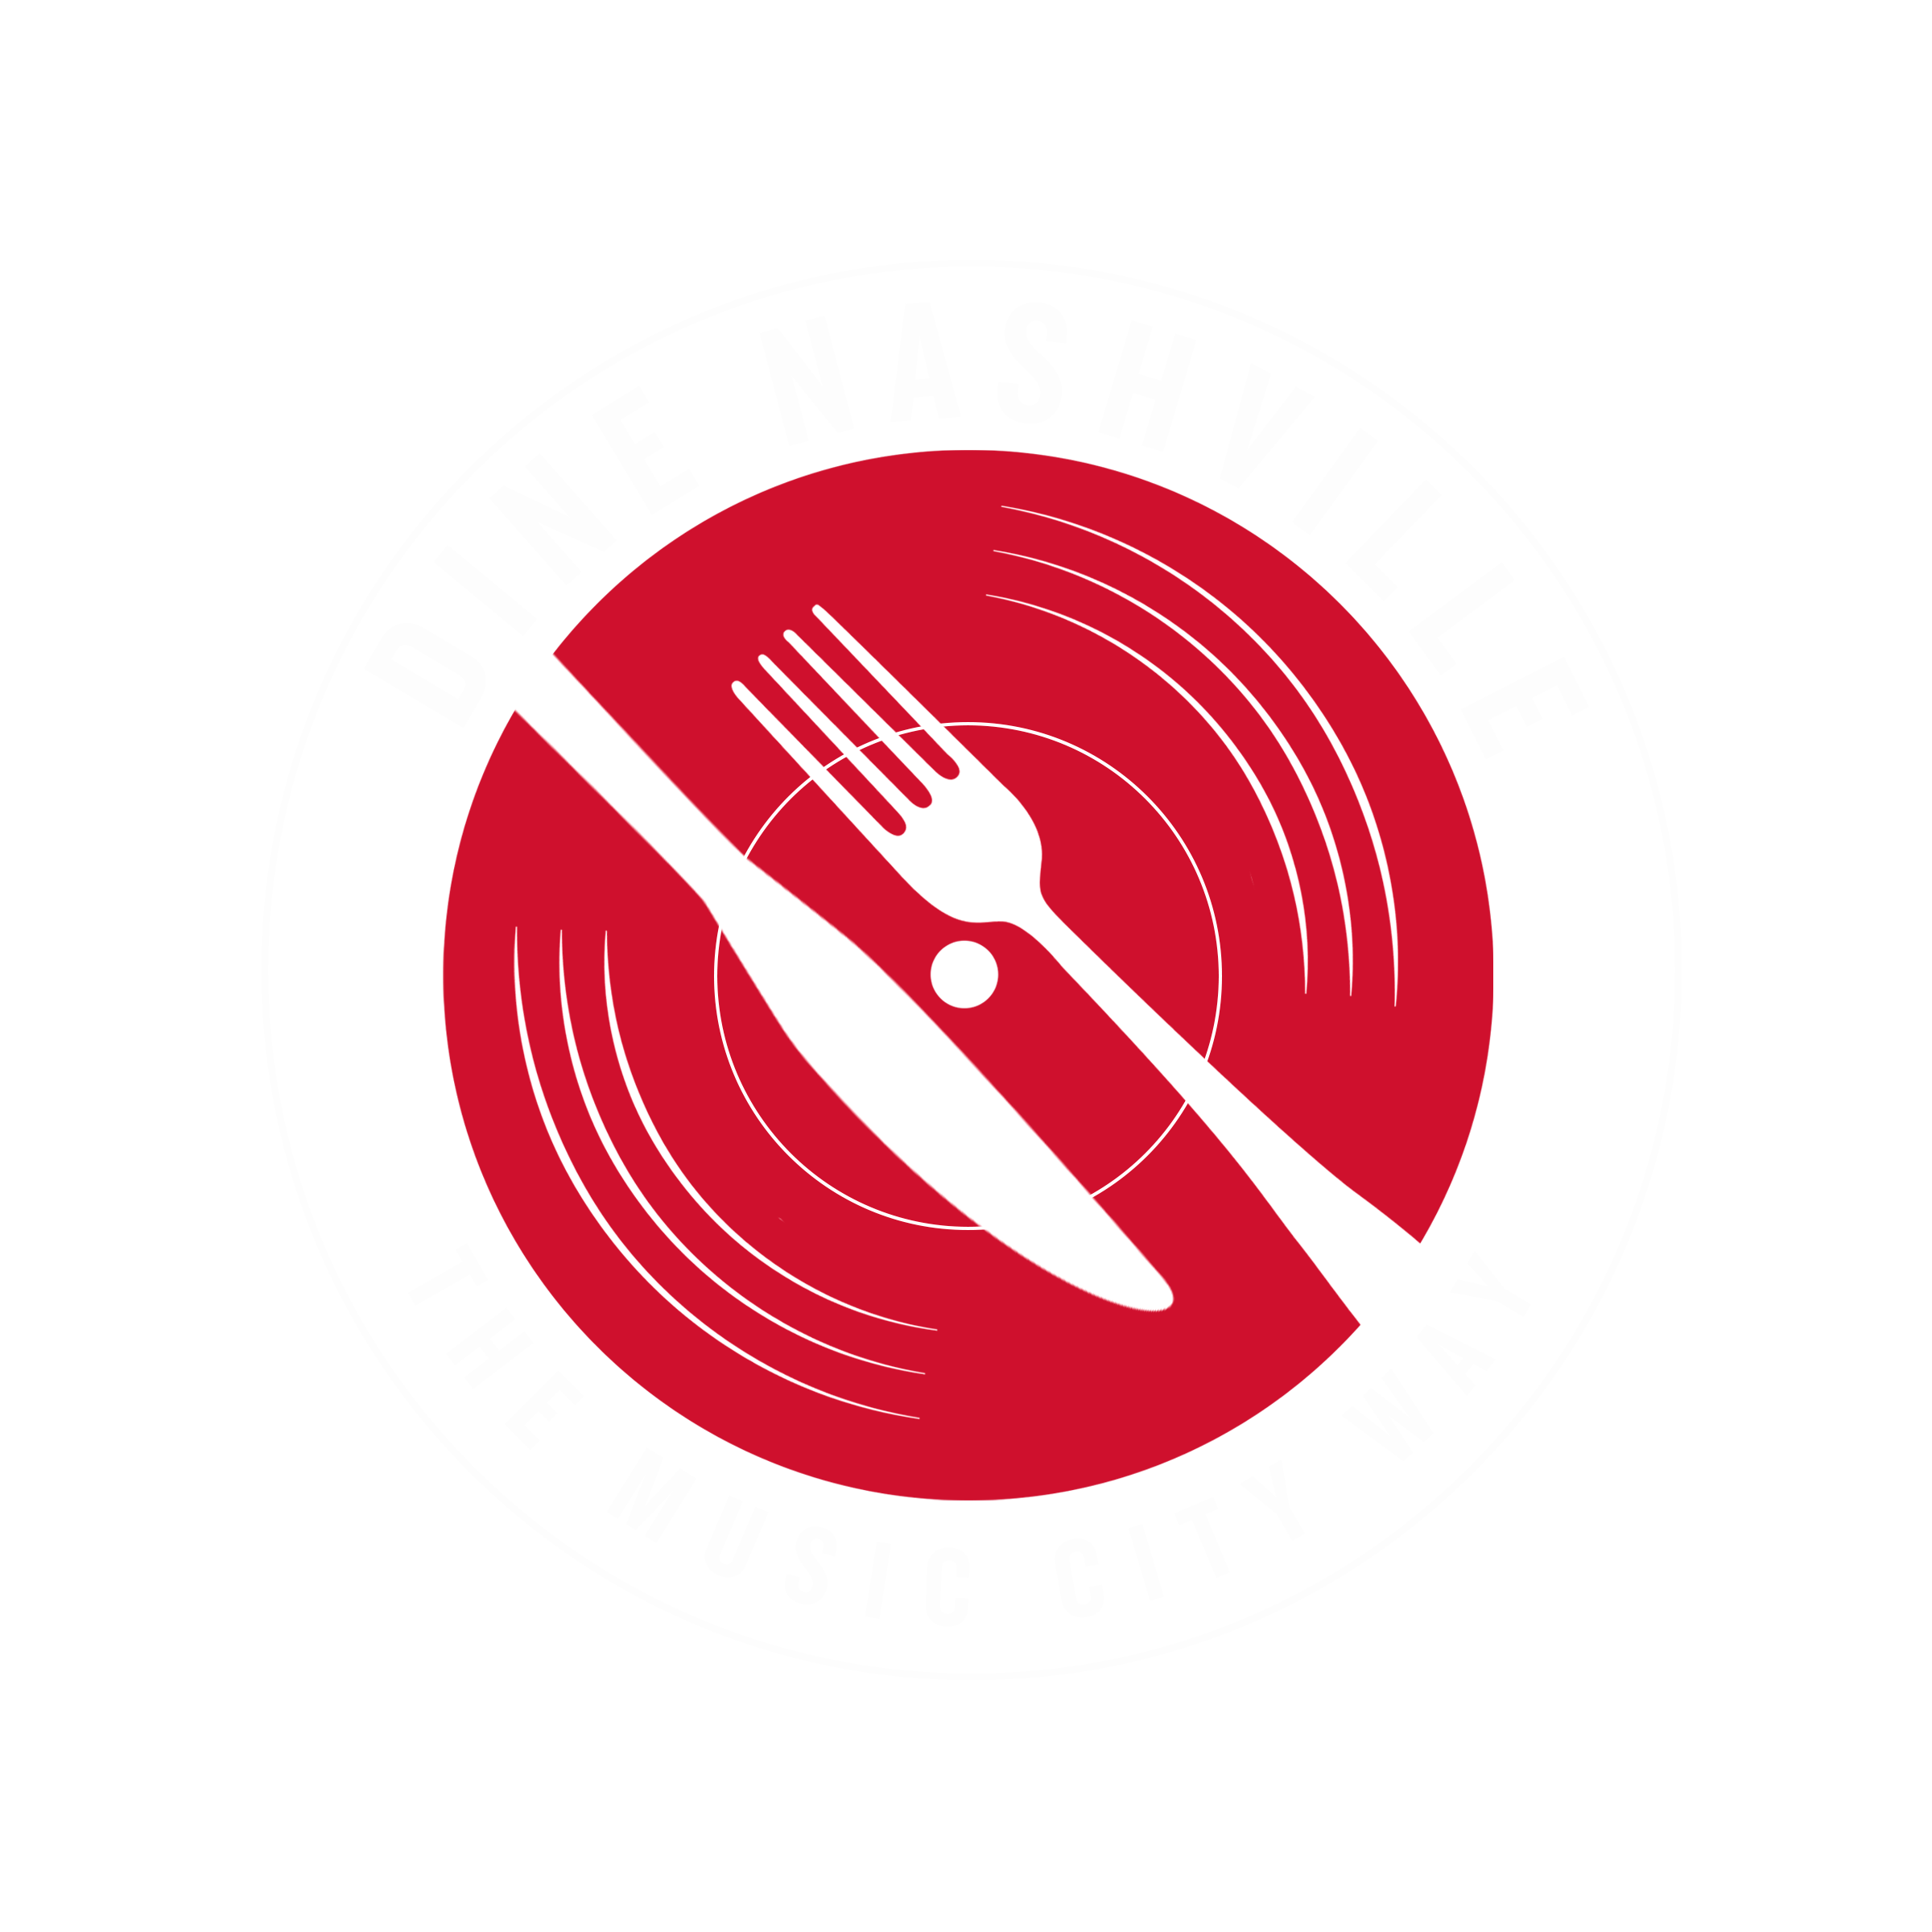 Dine Nashville: The Music City Way